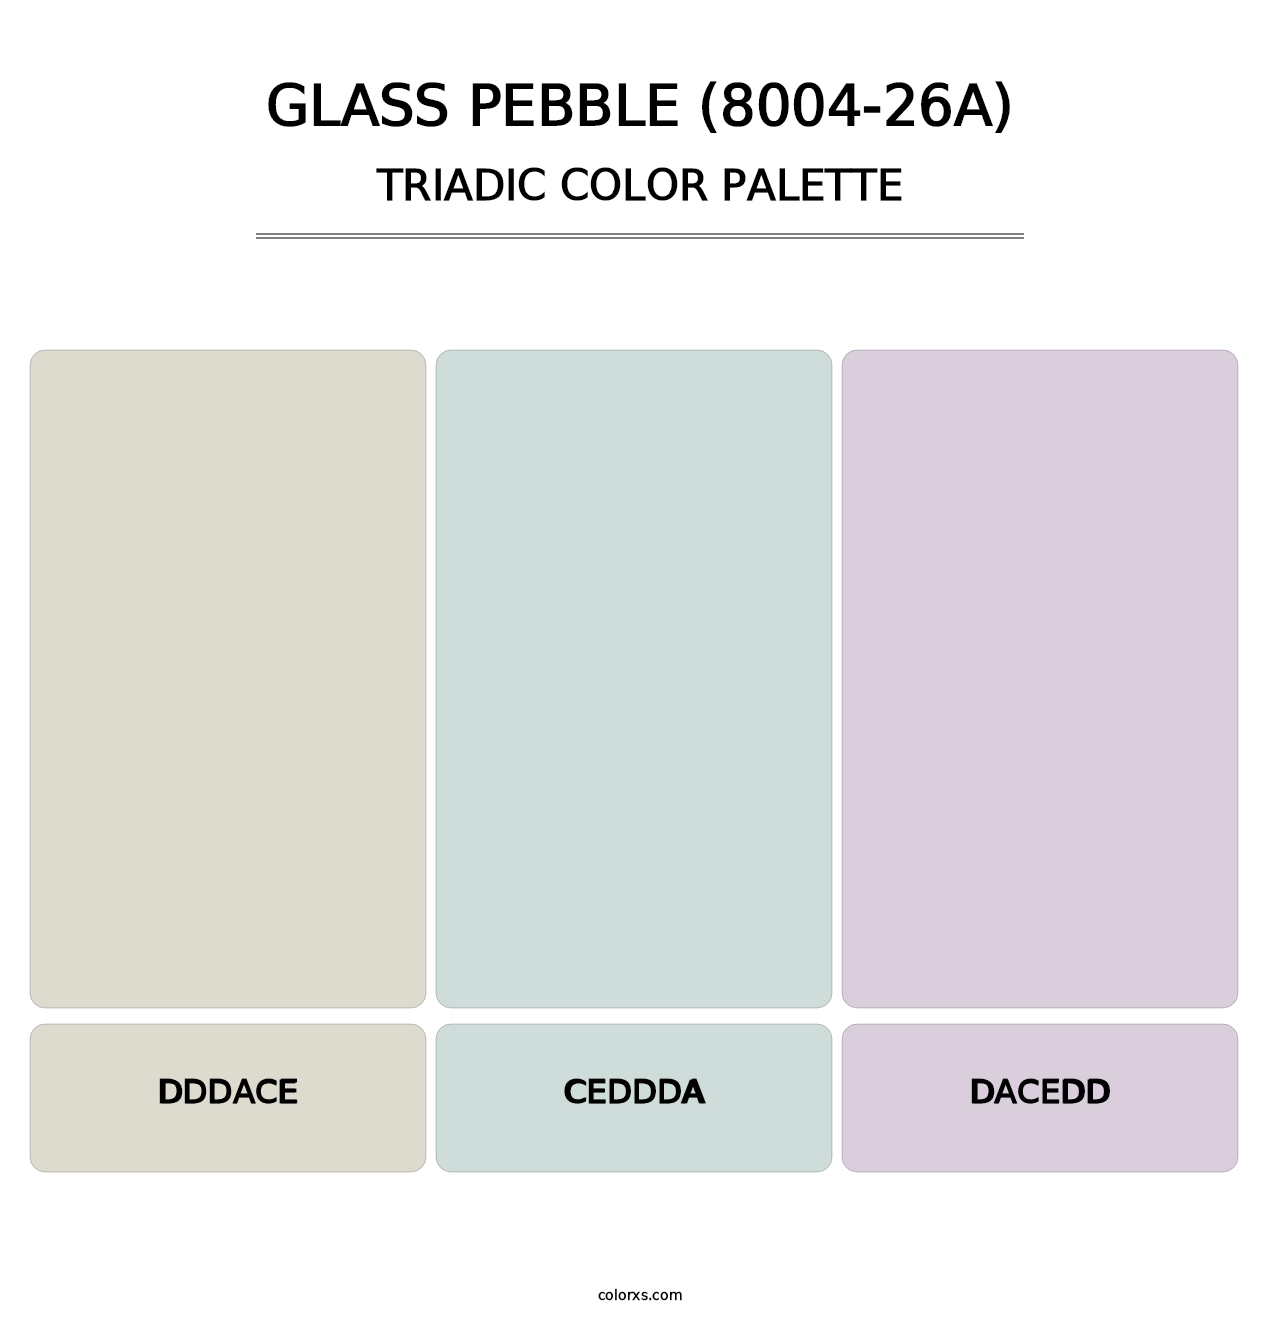 Glass Pebble (8004-26A) - Triadic Color Palette